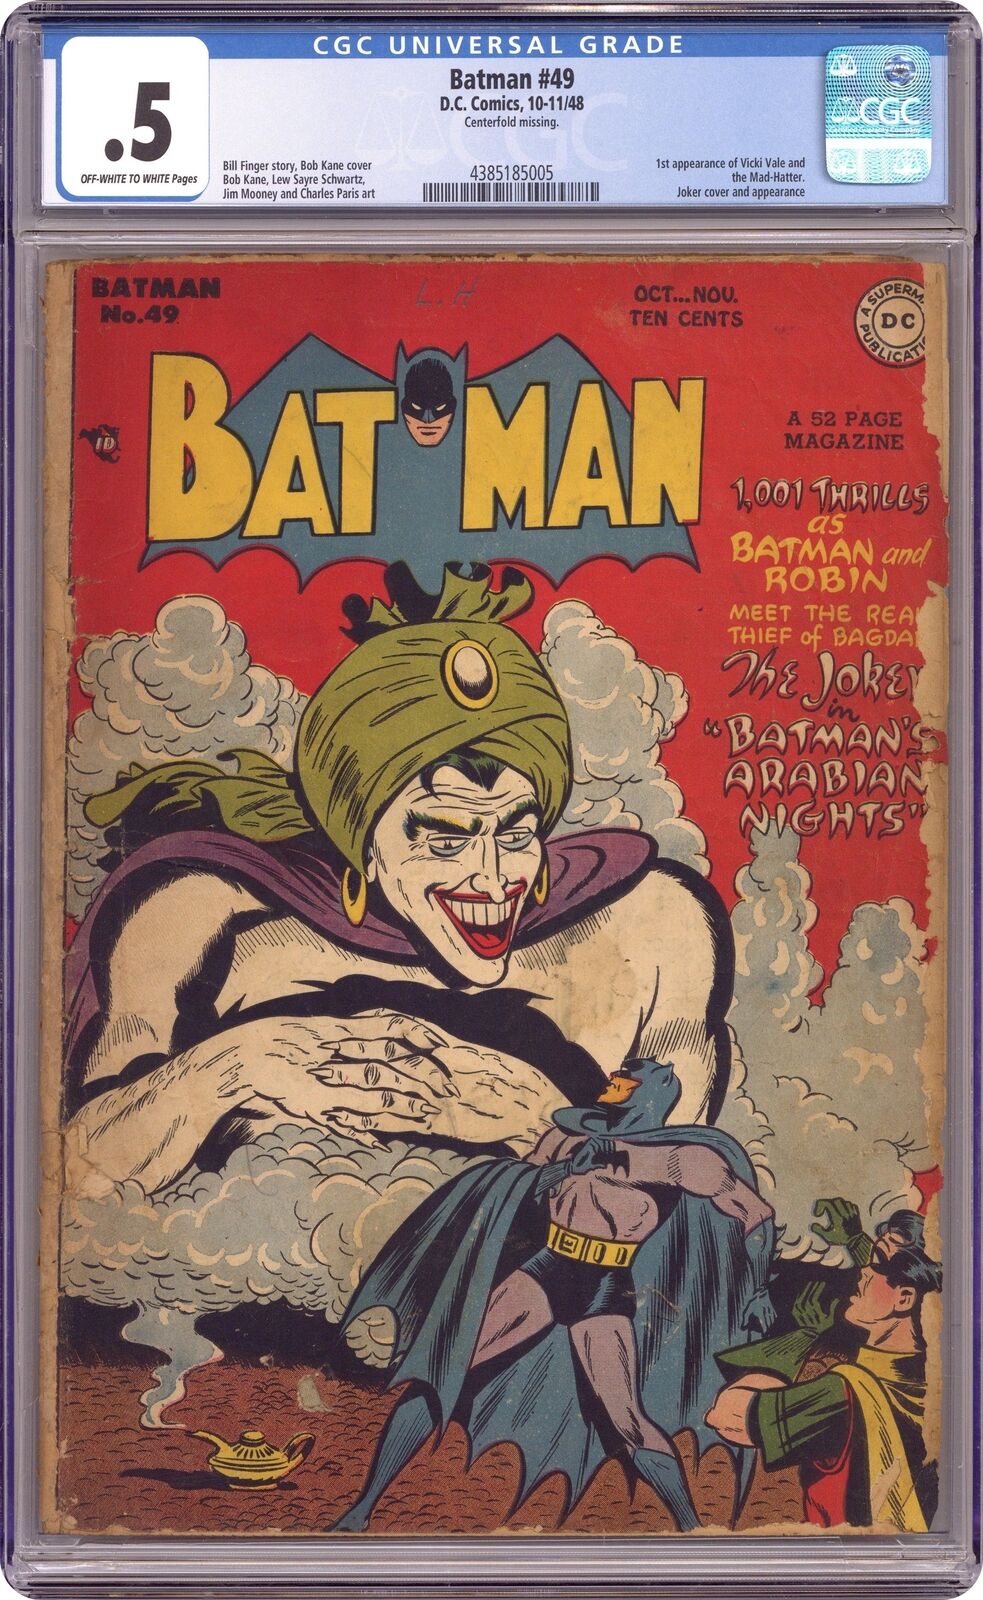 Batman #49 CGC 0.5 1948 4385185005 1st app. Mad Hatter, Vicki Vale